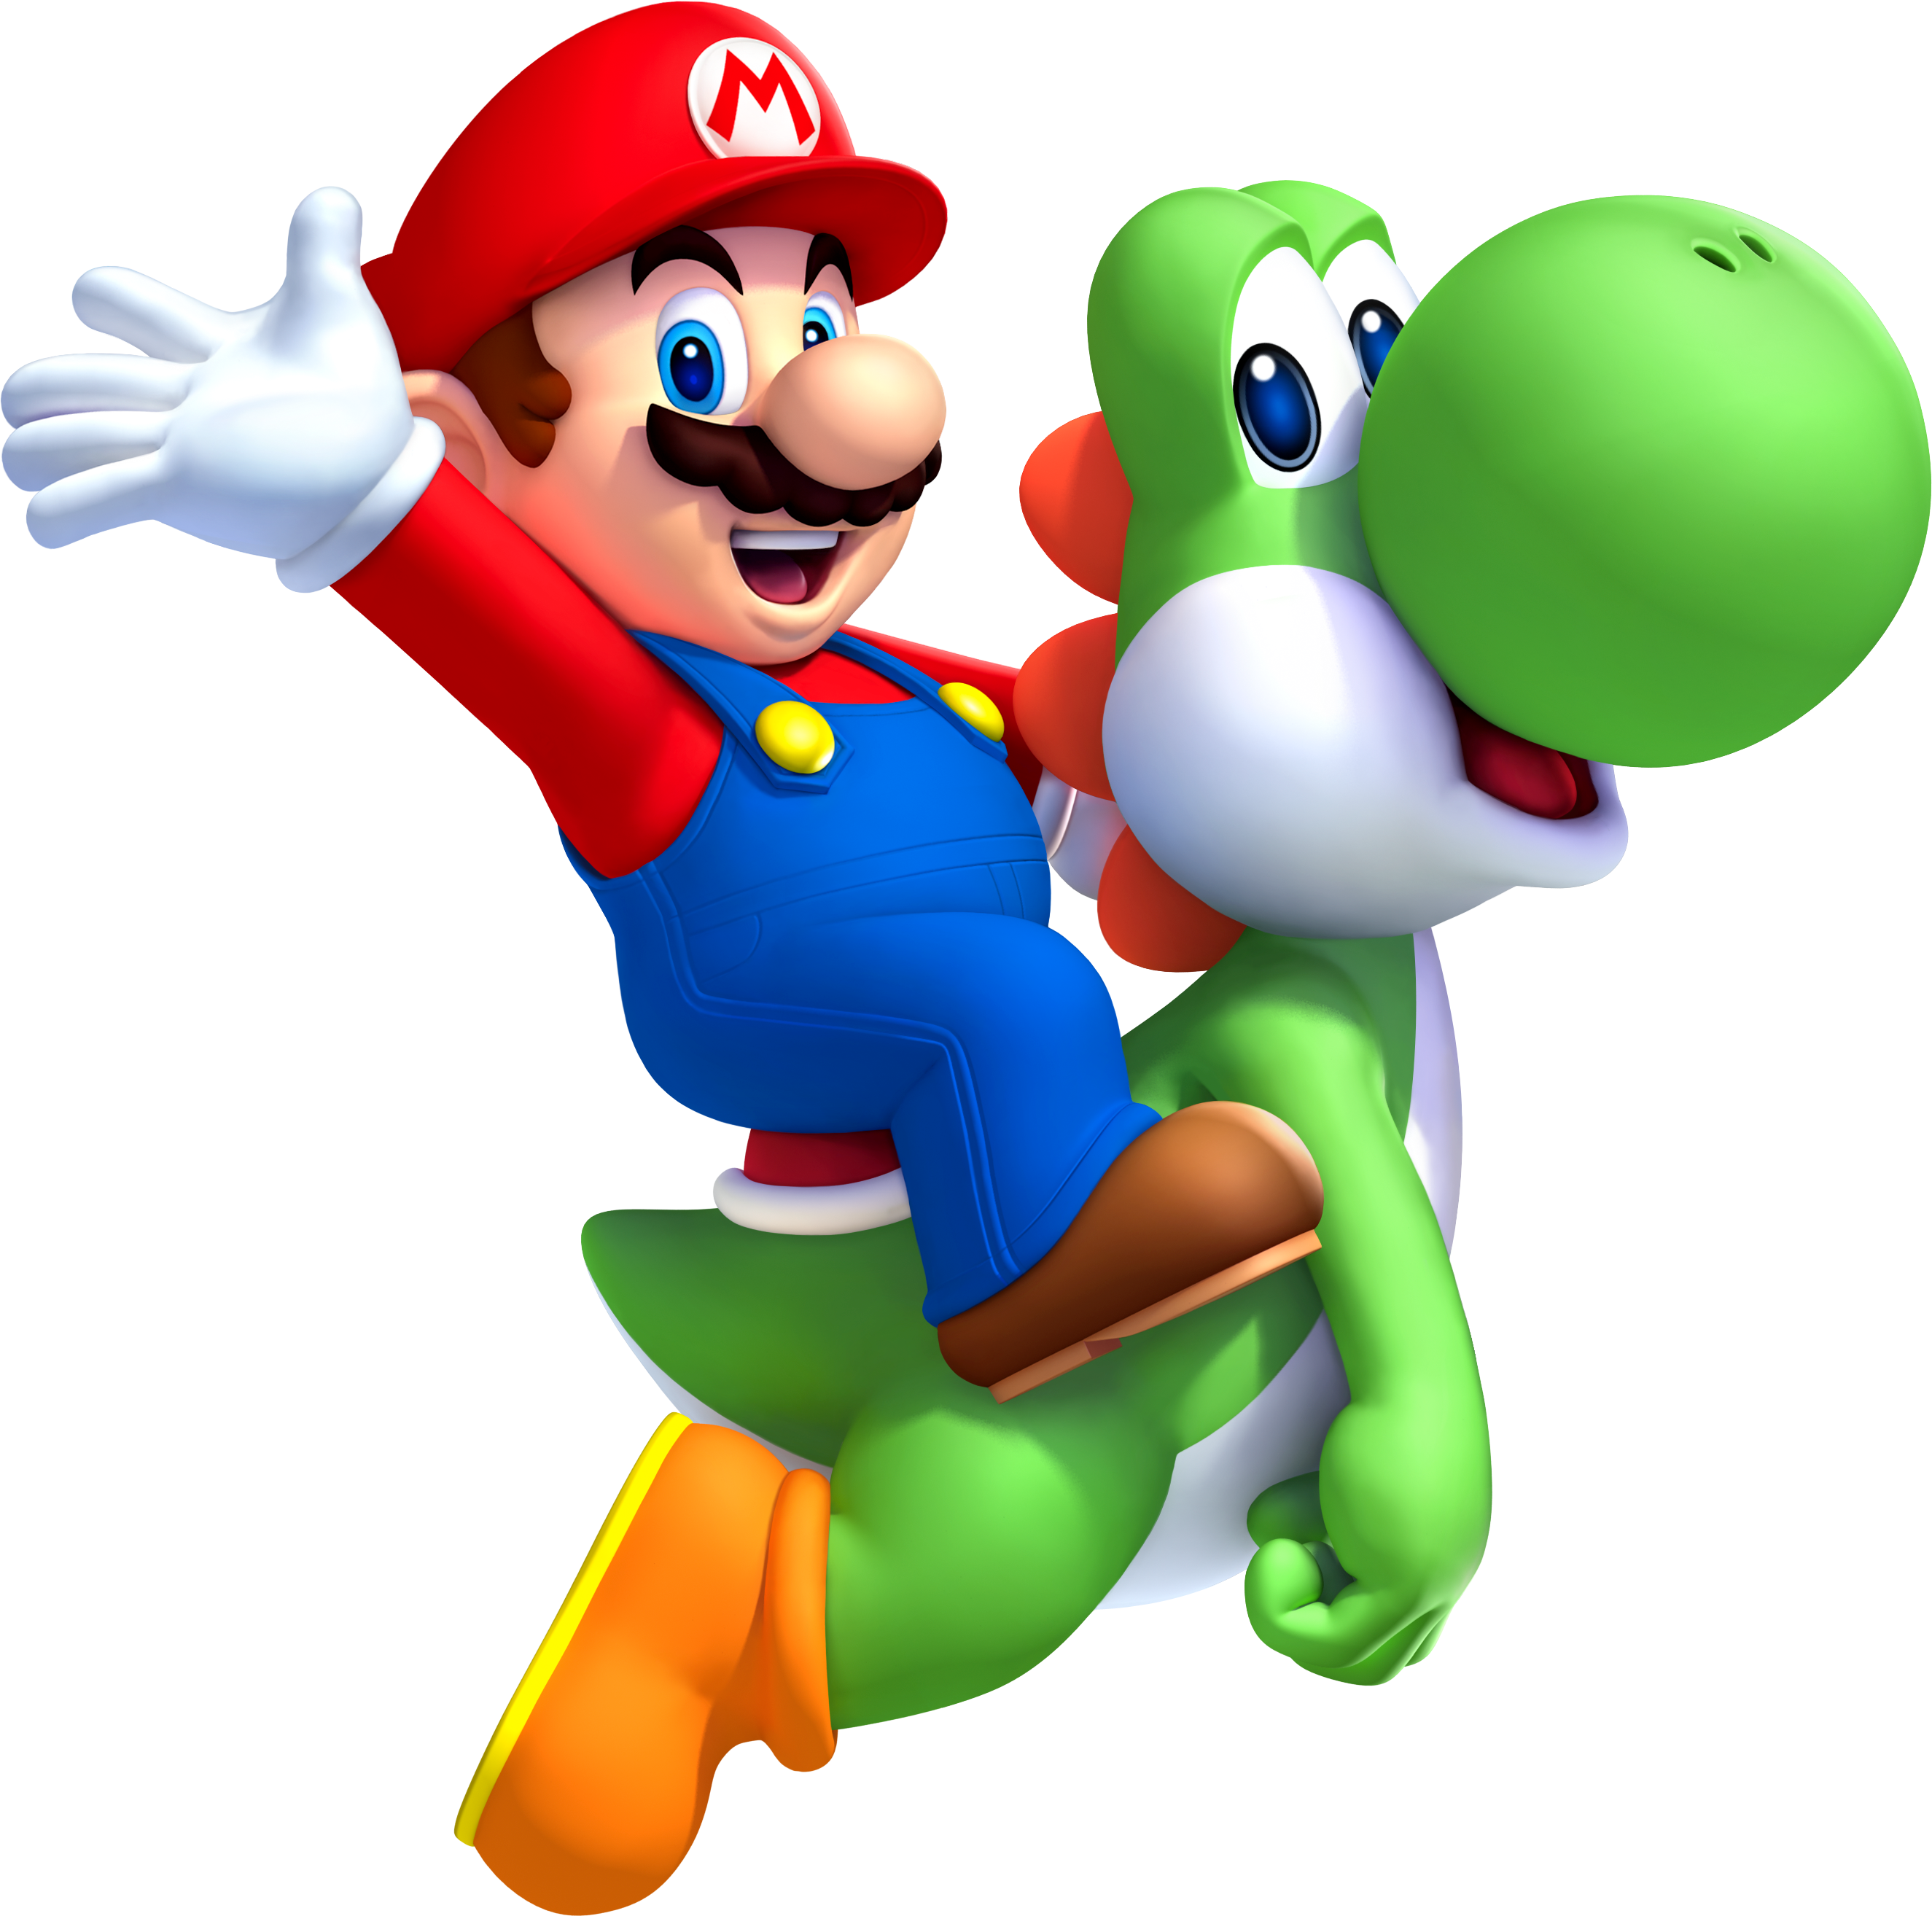 Artwork of Mario and Yoshi, from New Super Mario Bros. U.